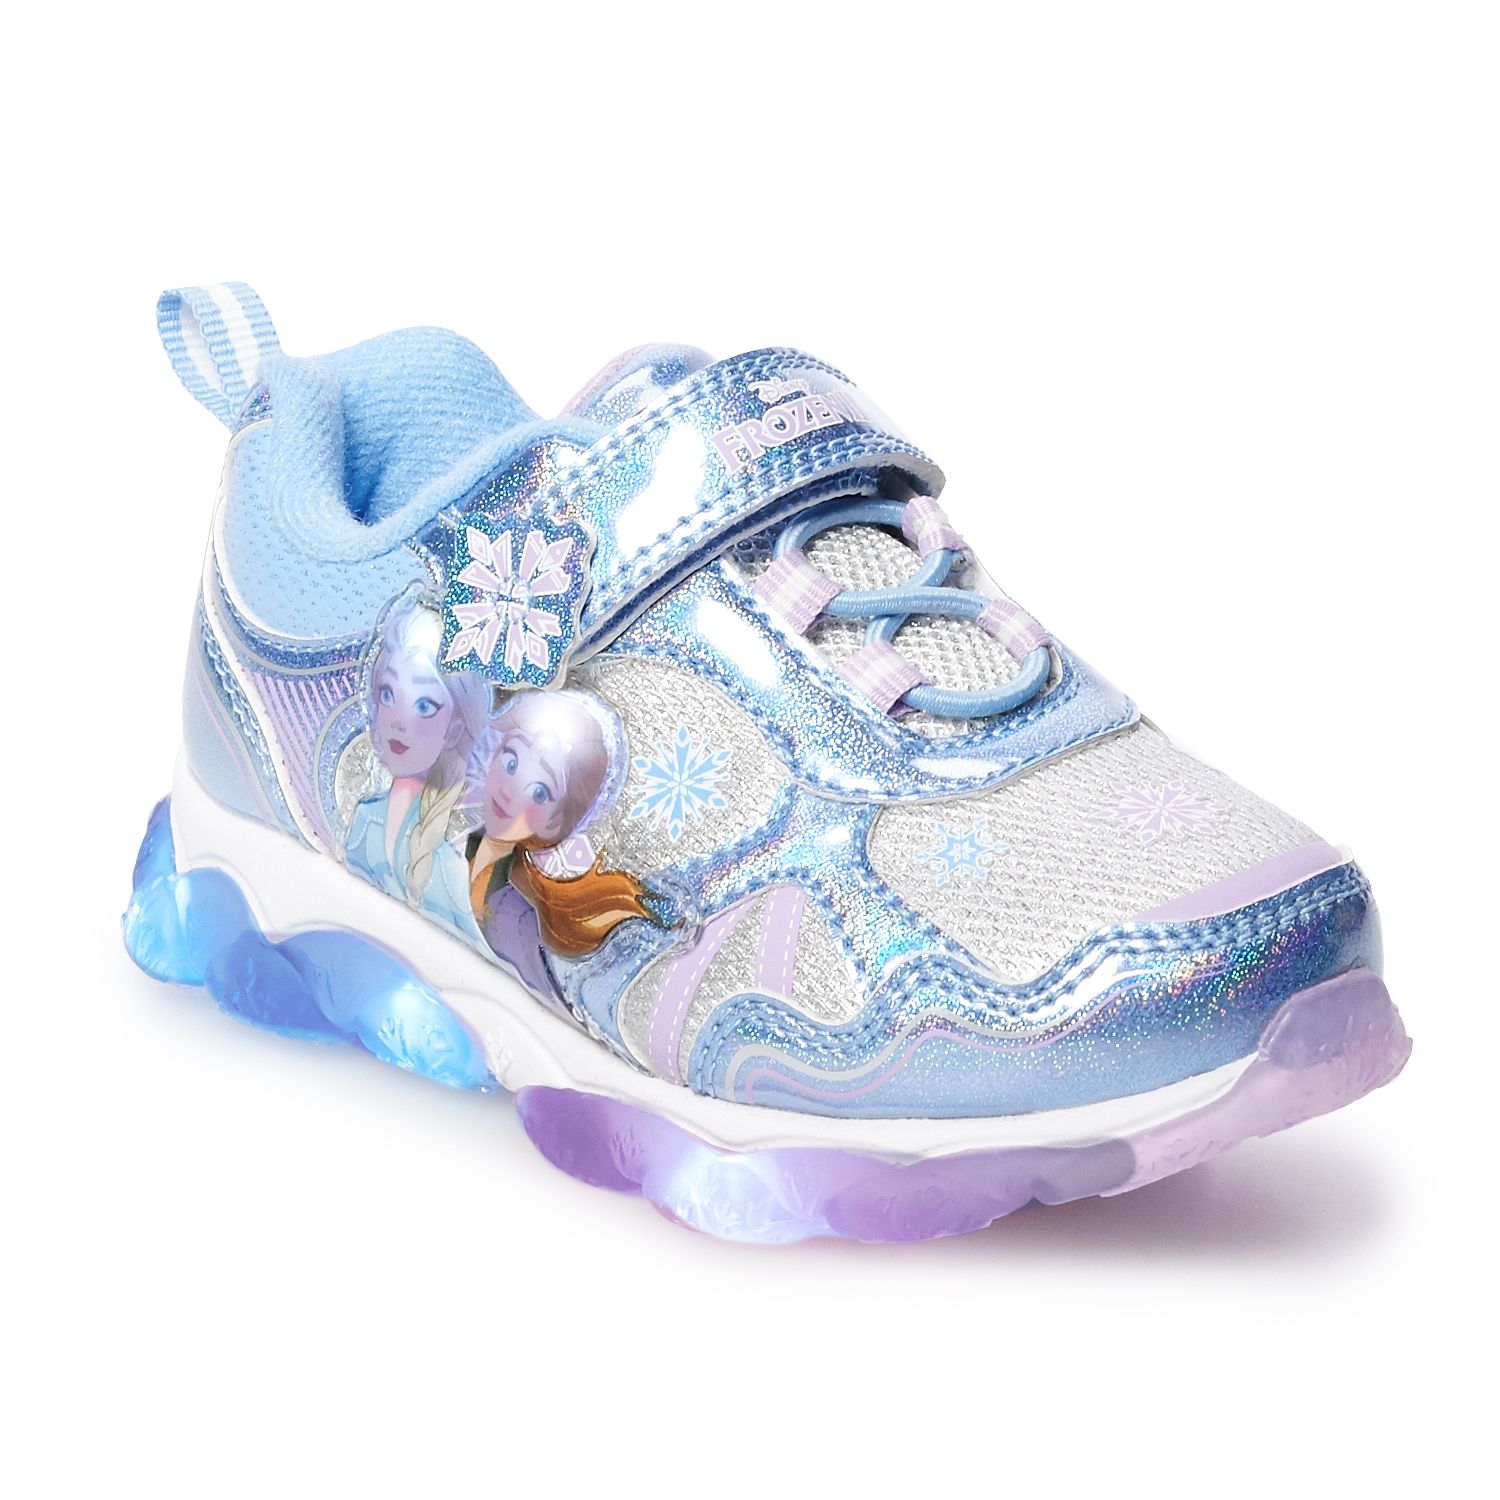 lightning shoes for babies